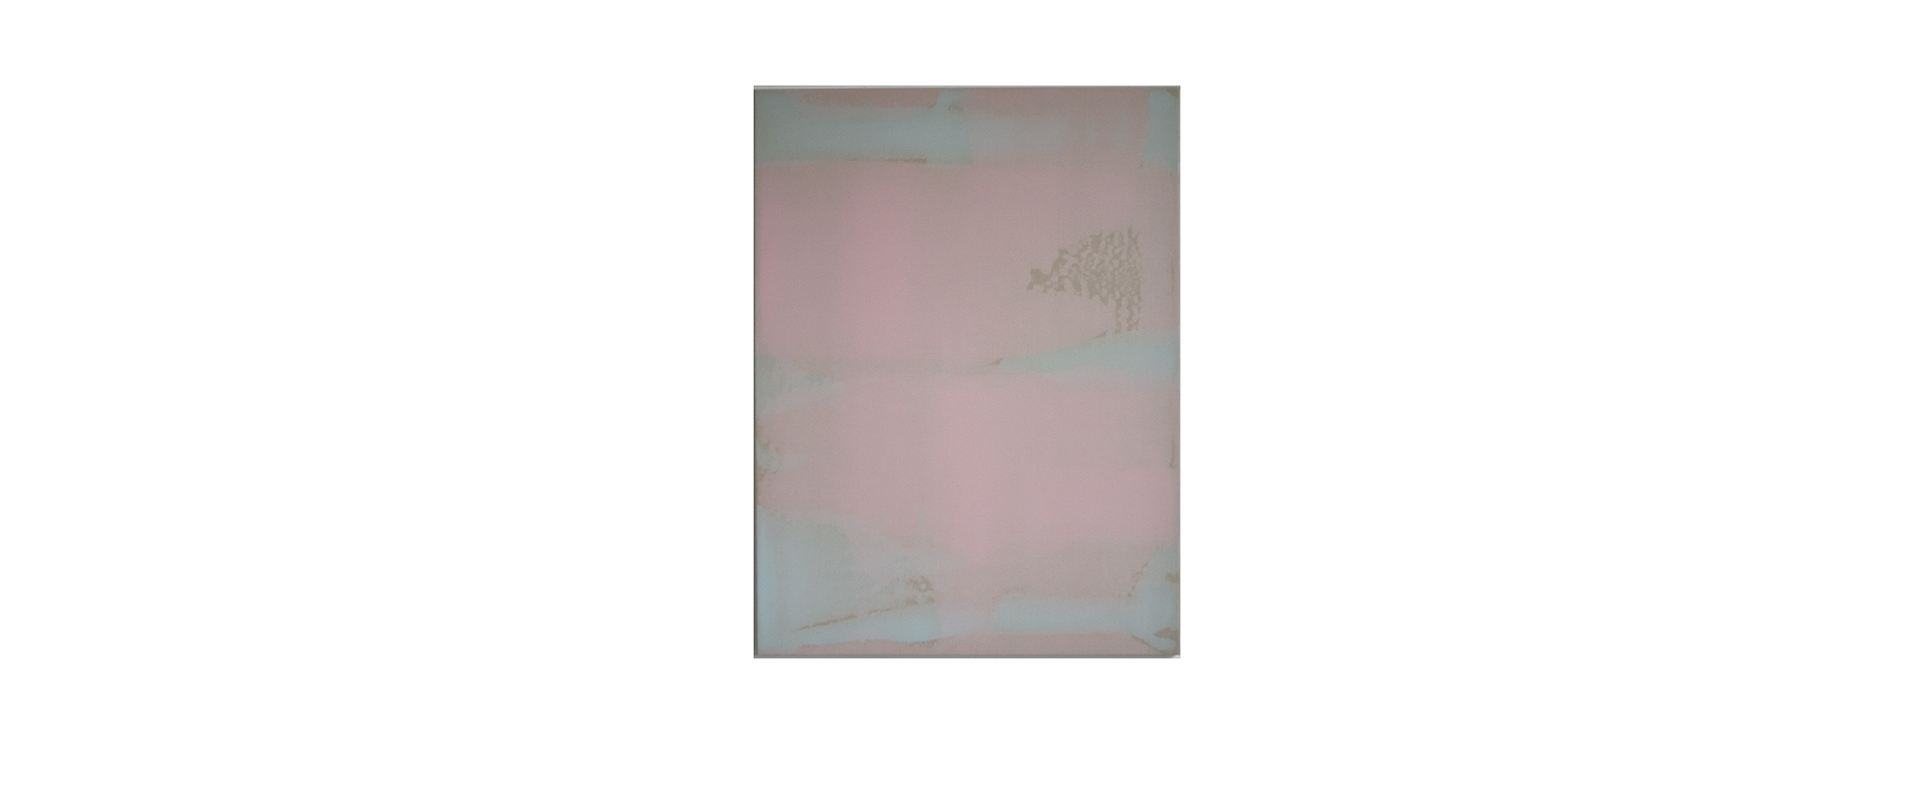 20201003 – 2020, Acryl auf Leinwand, 120 x 90 cm